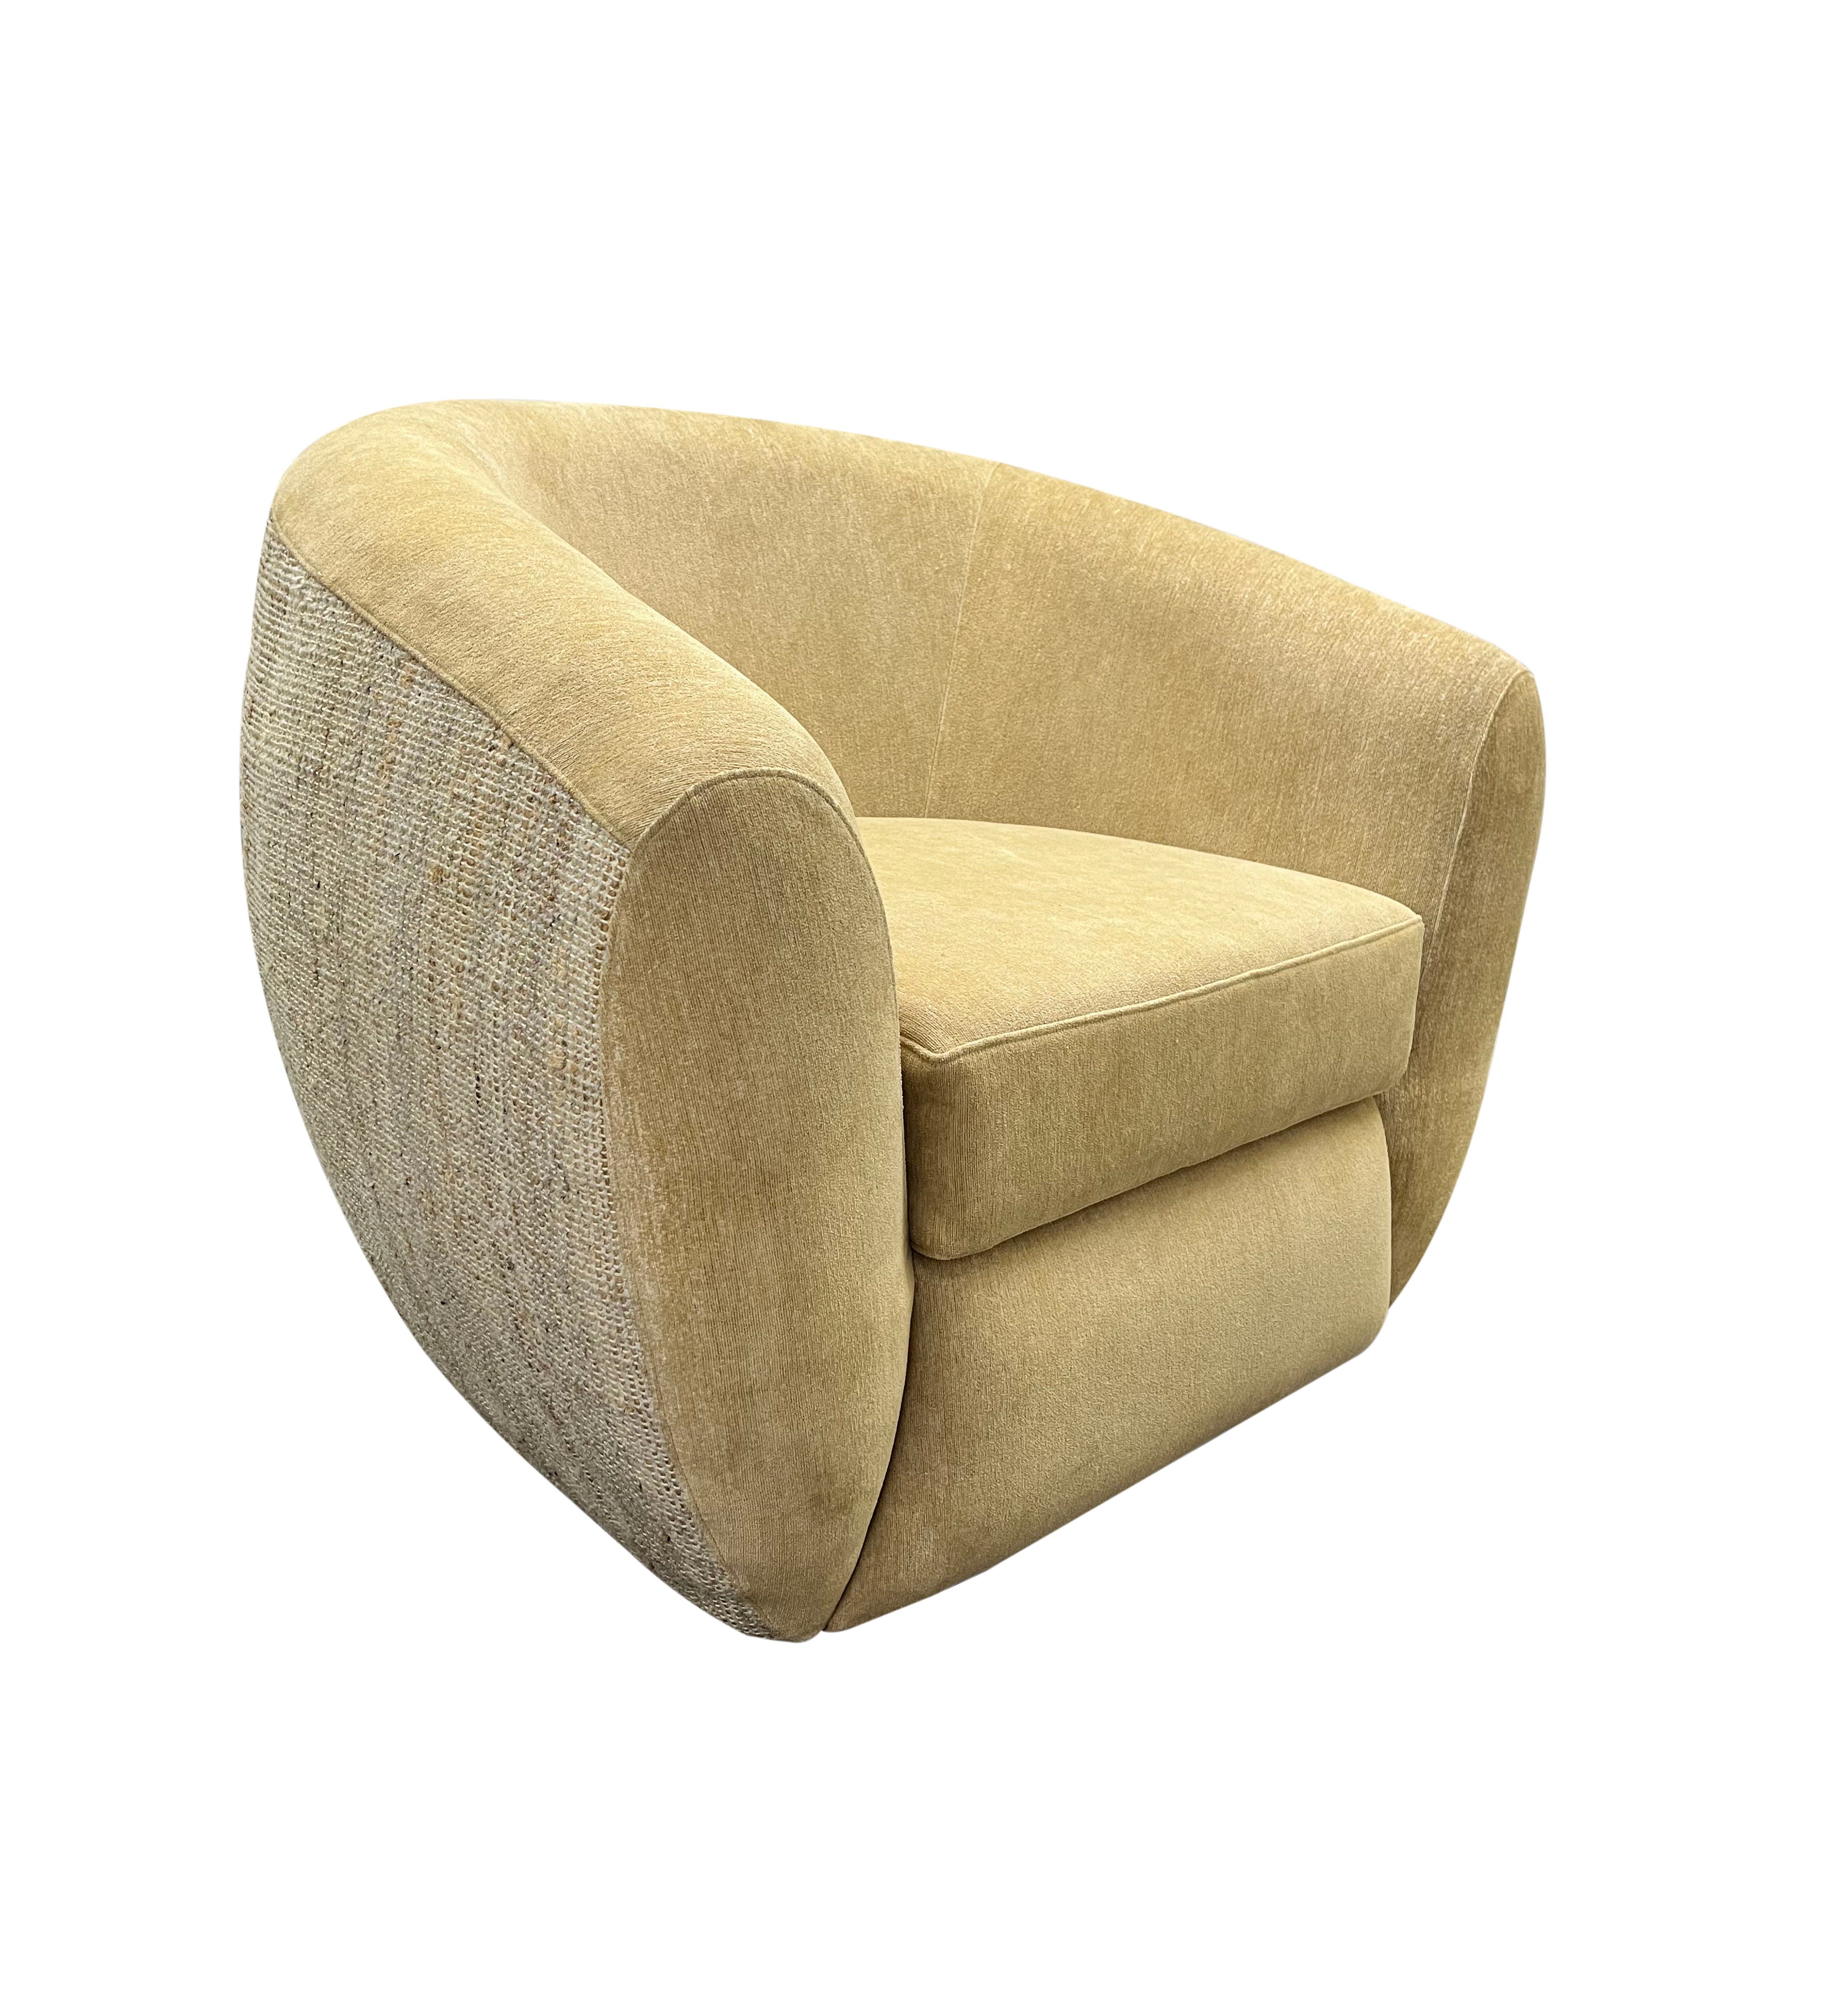 Bolsena - Swivel Accent Chair - Cream/Natural